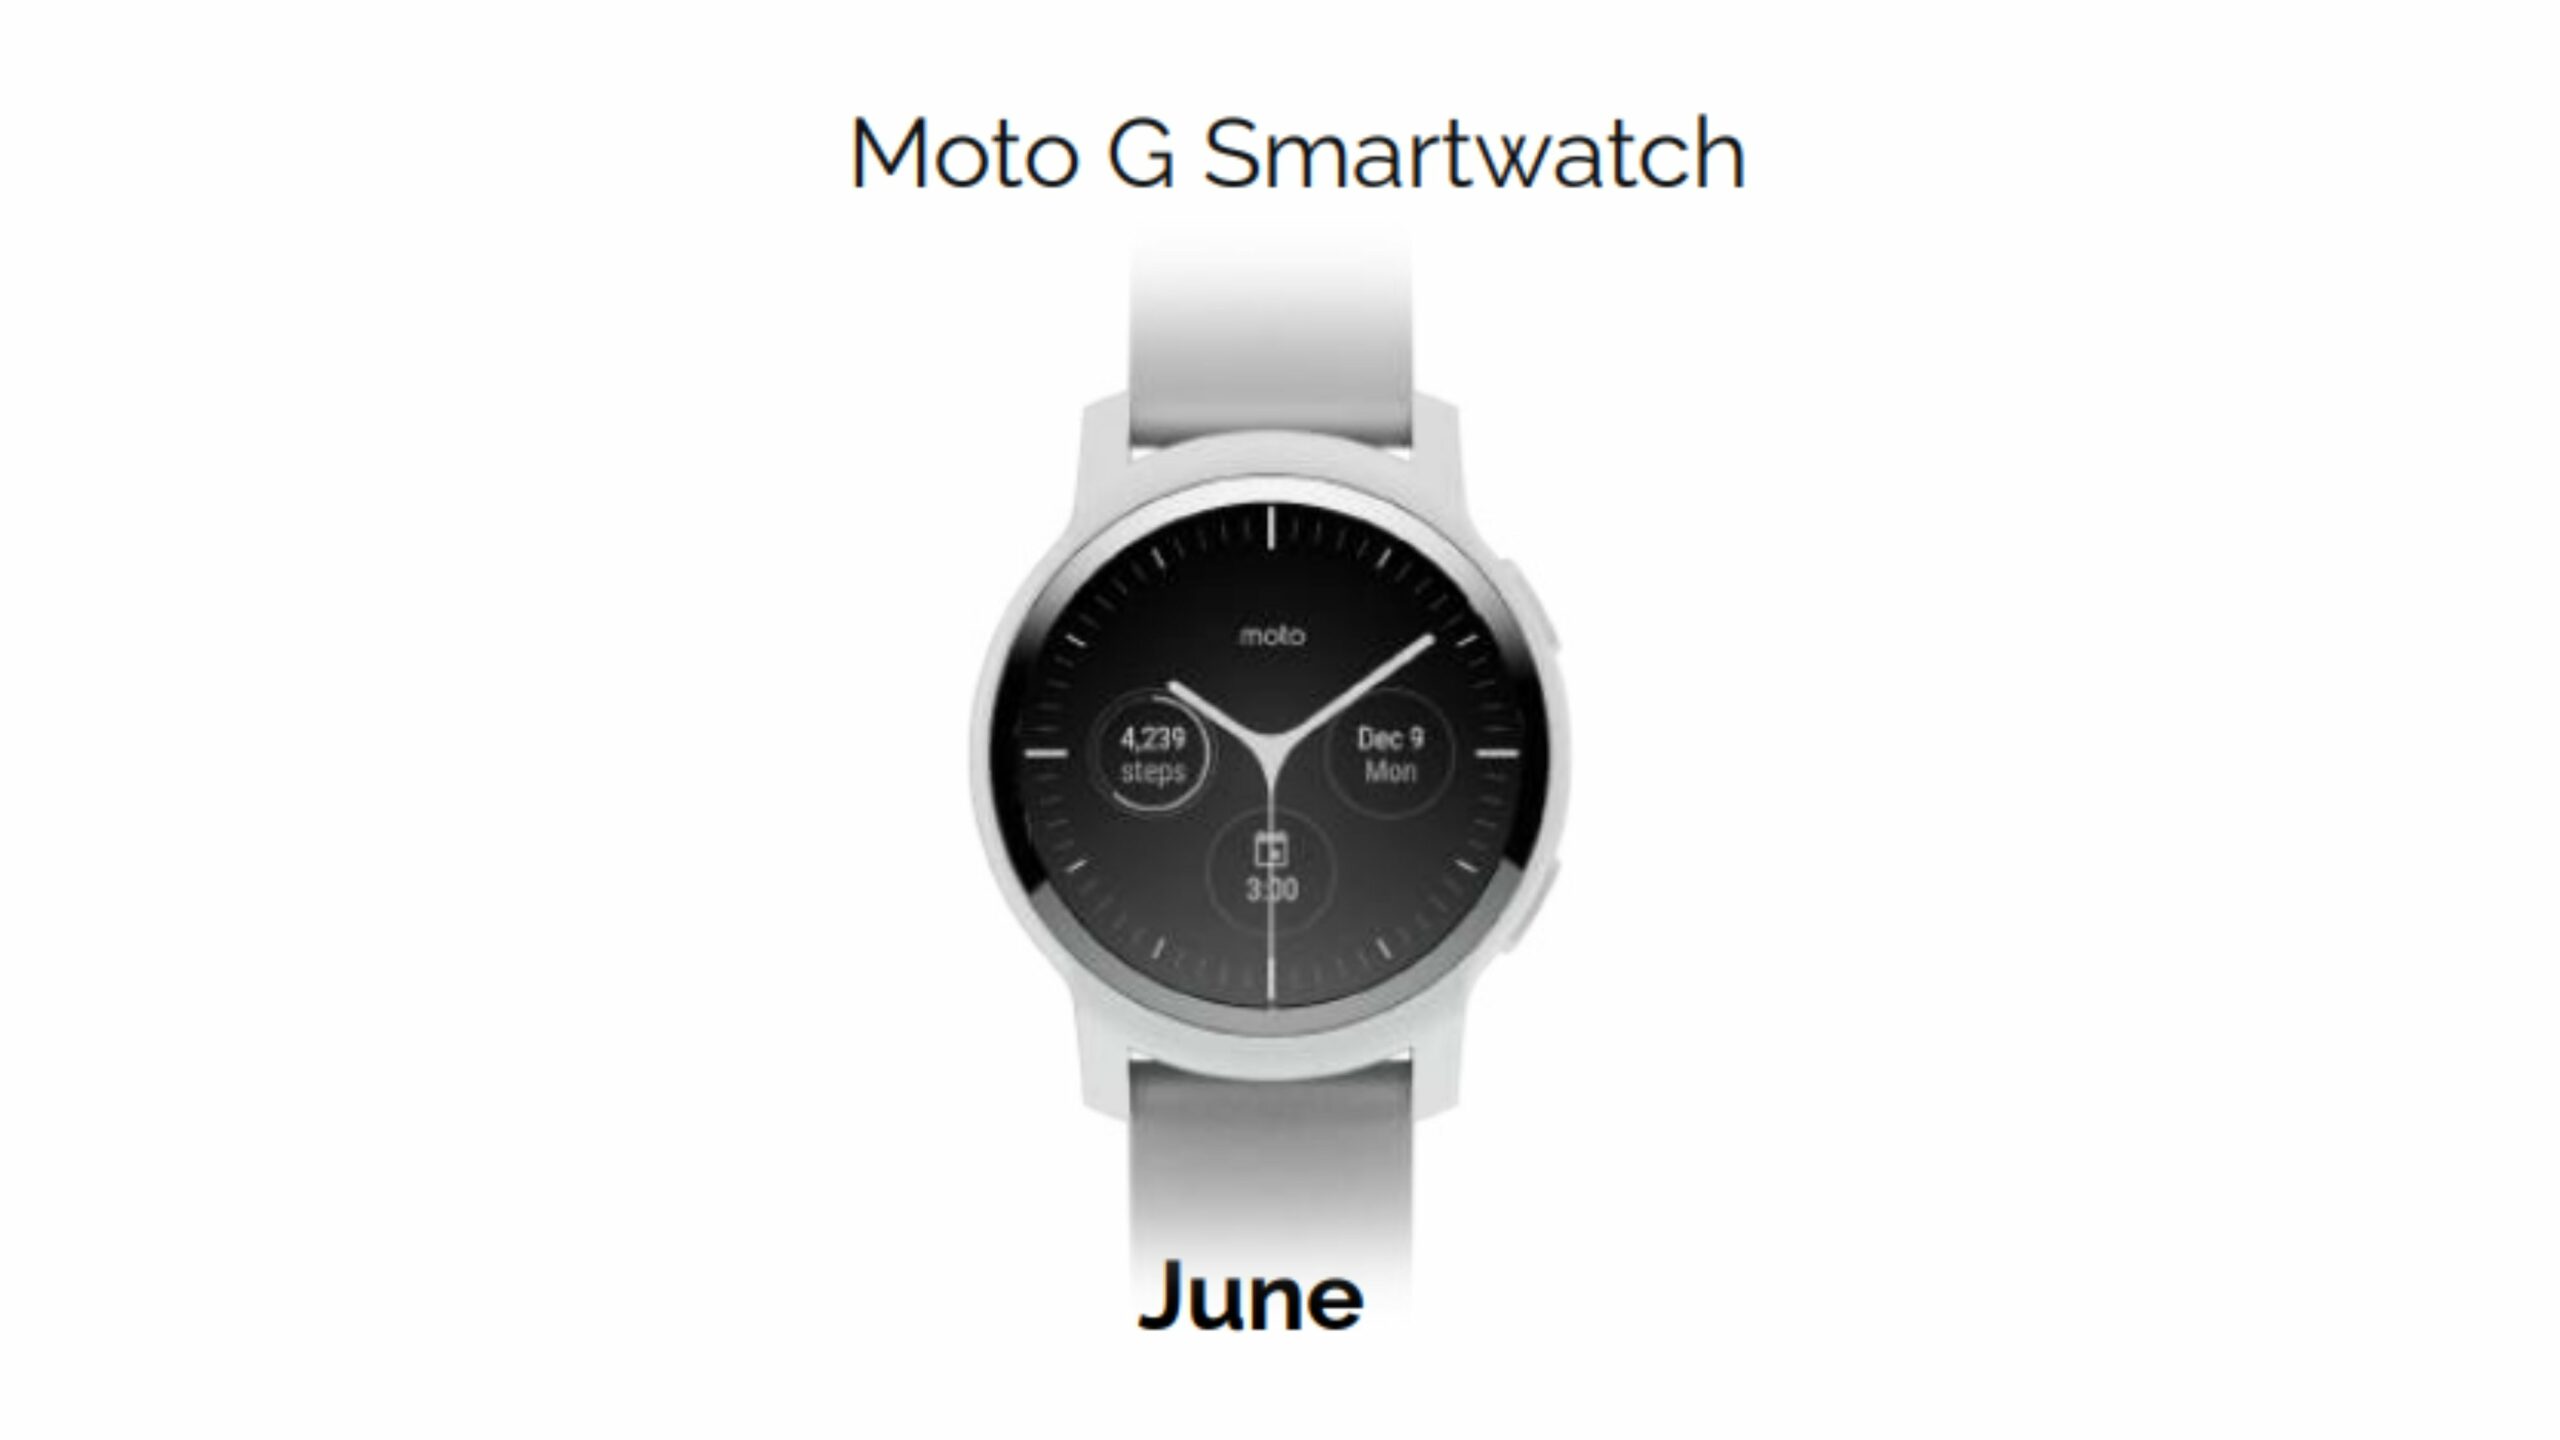 Moto G Smartwatch sceitheadh